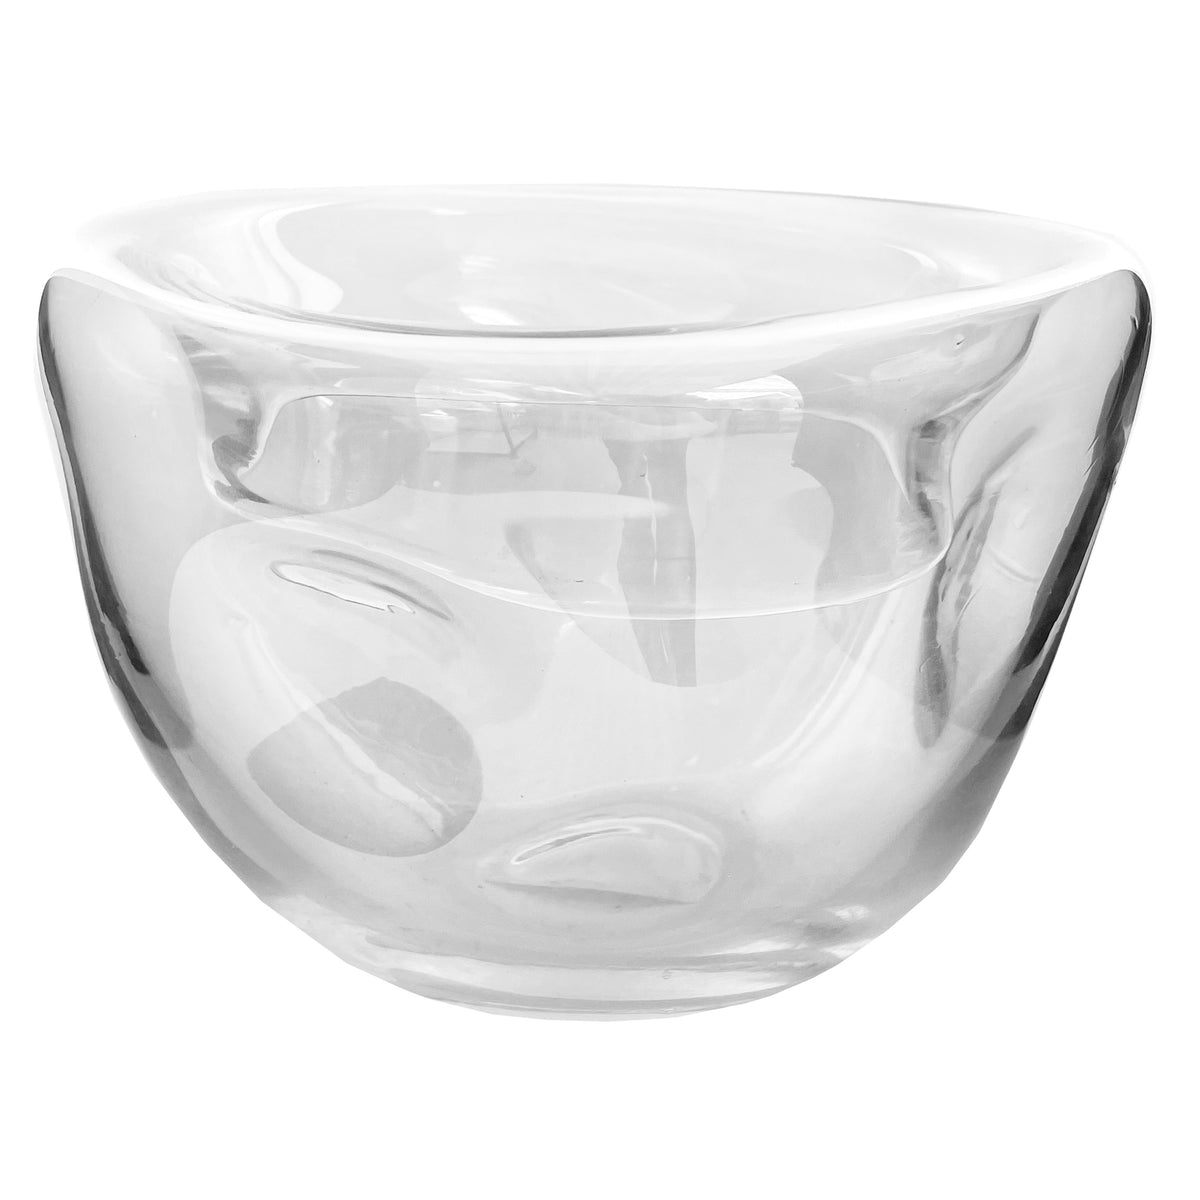 Glass organic vase clear